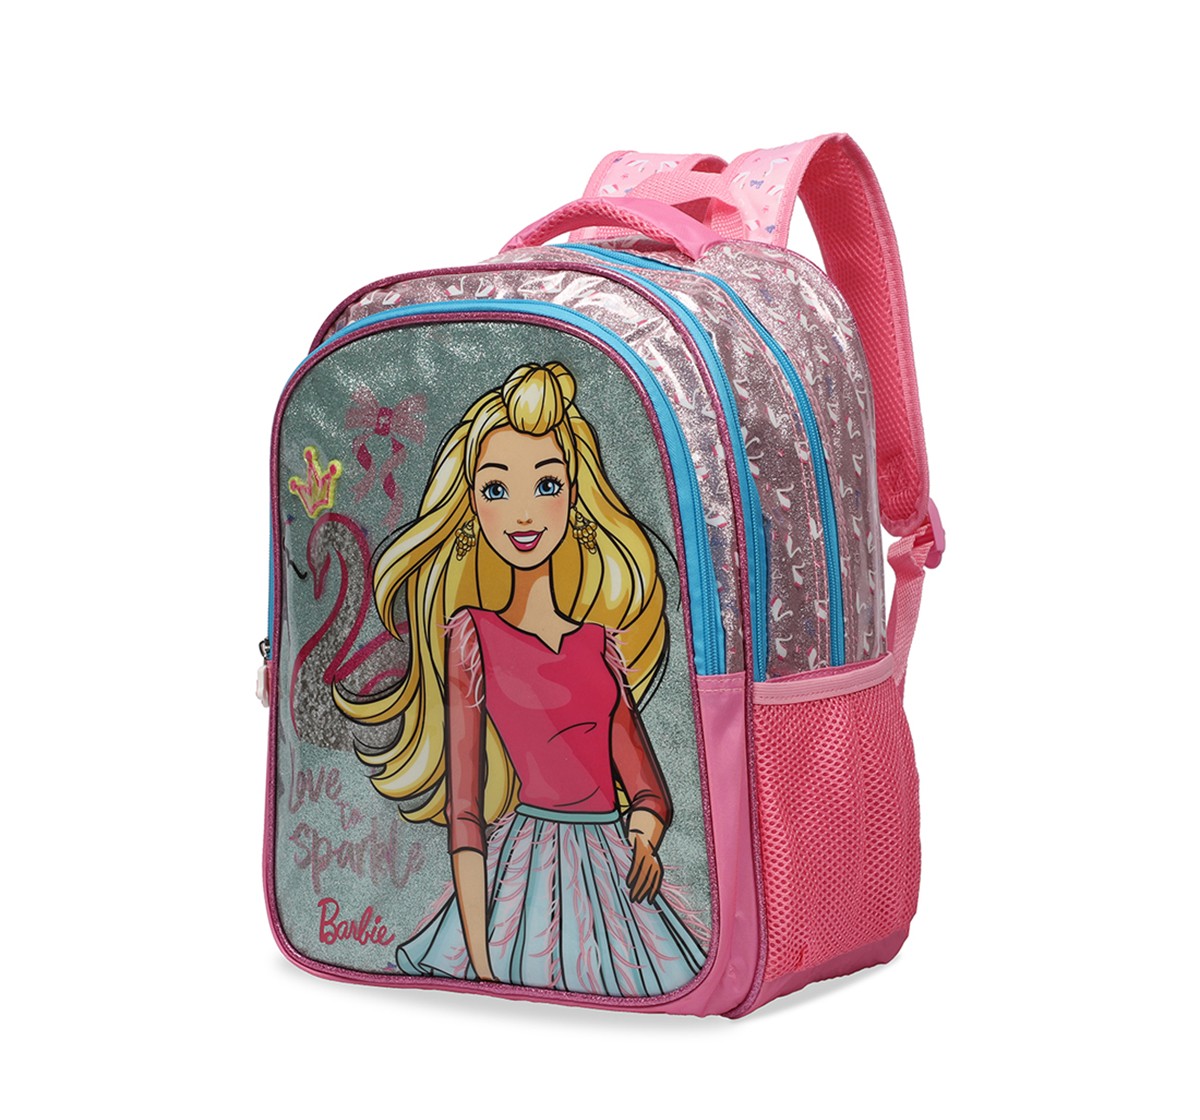 Barbie Barbie Love Sparkle Glitter School Bag 41 Cm Bags for age 7Y+ 